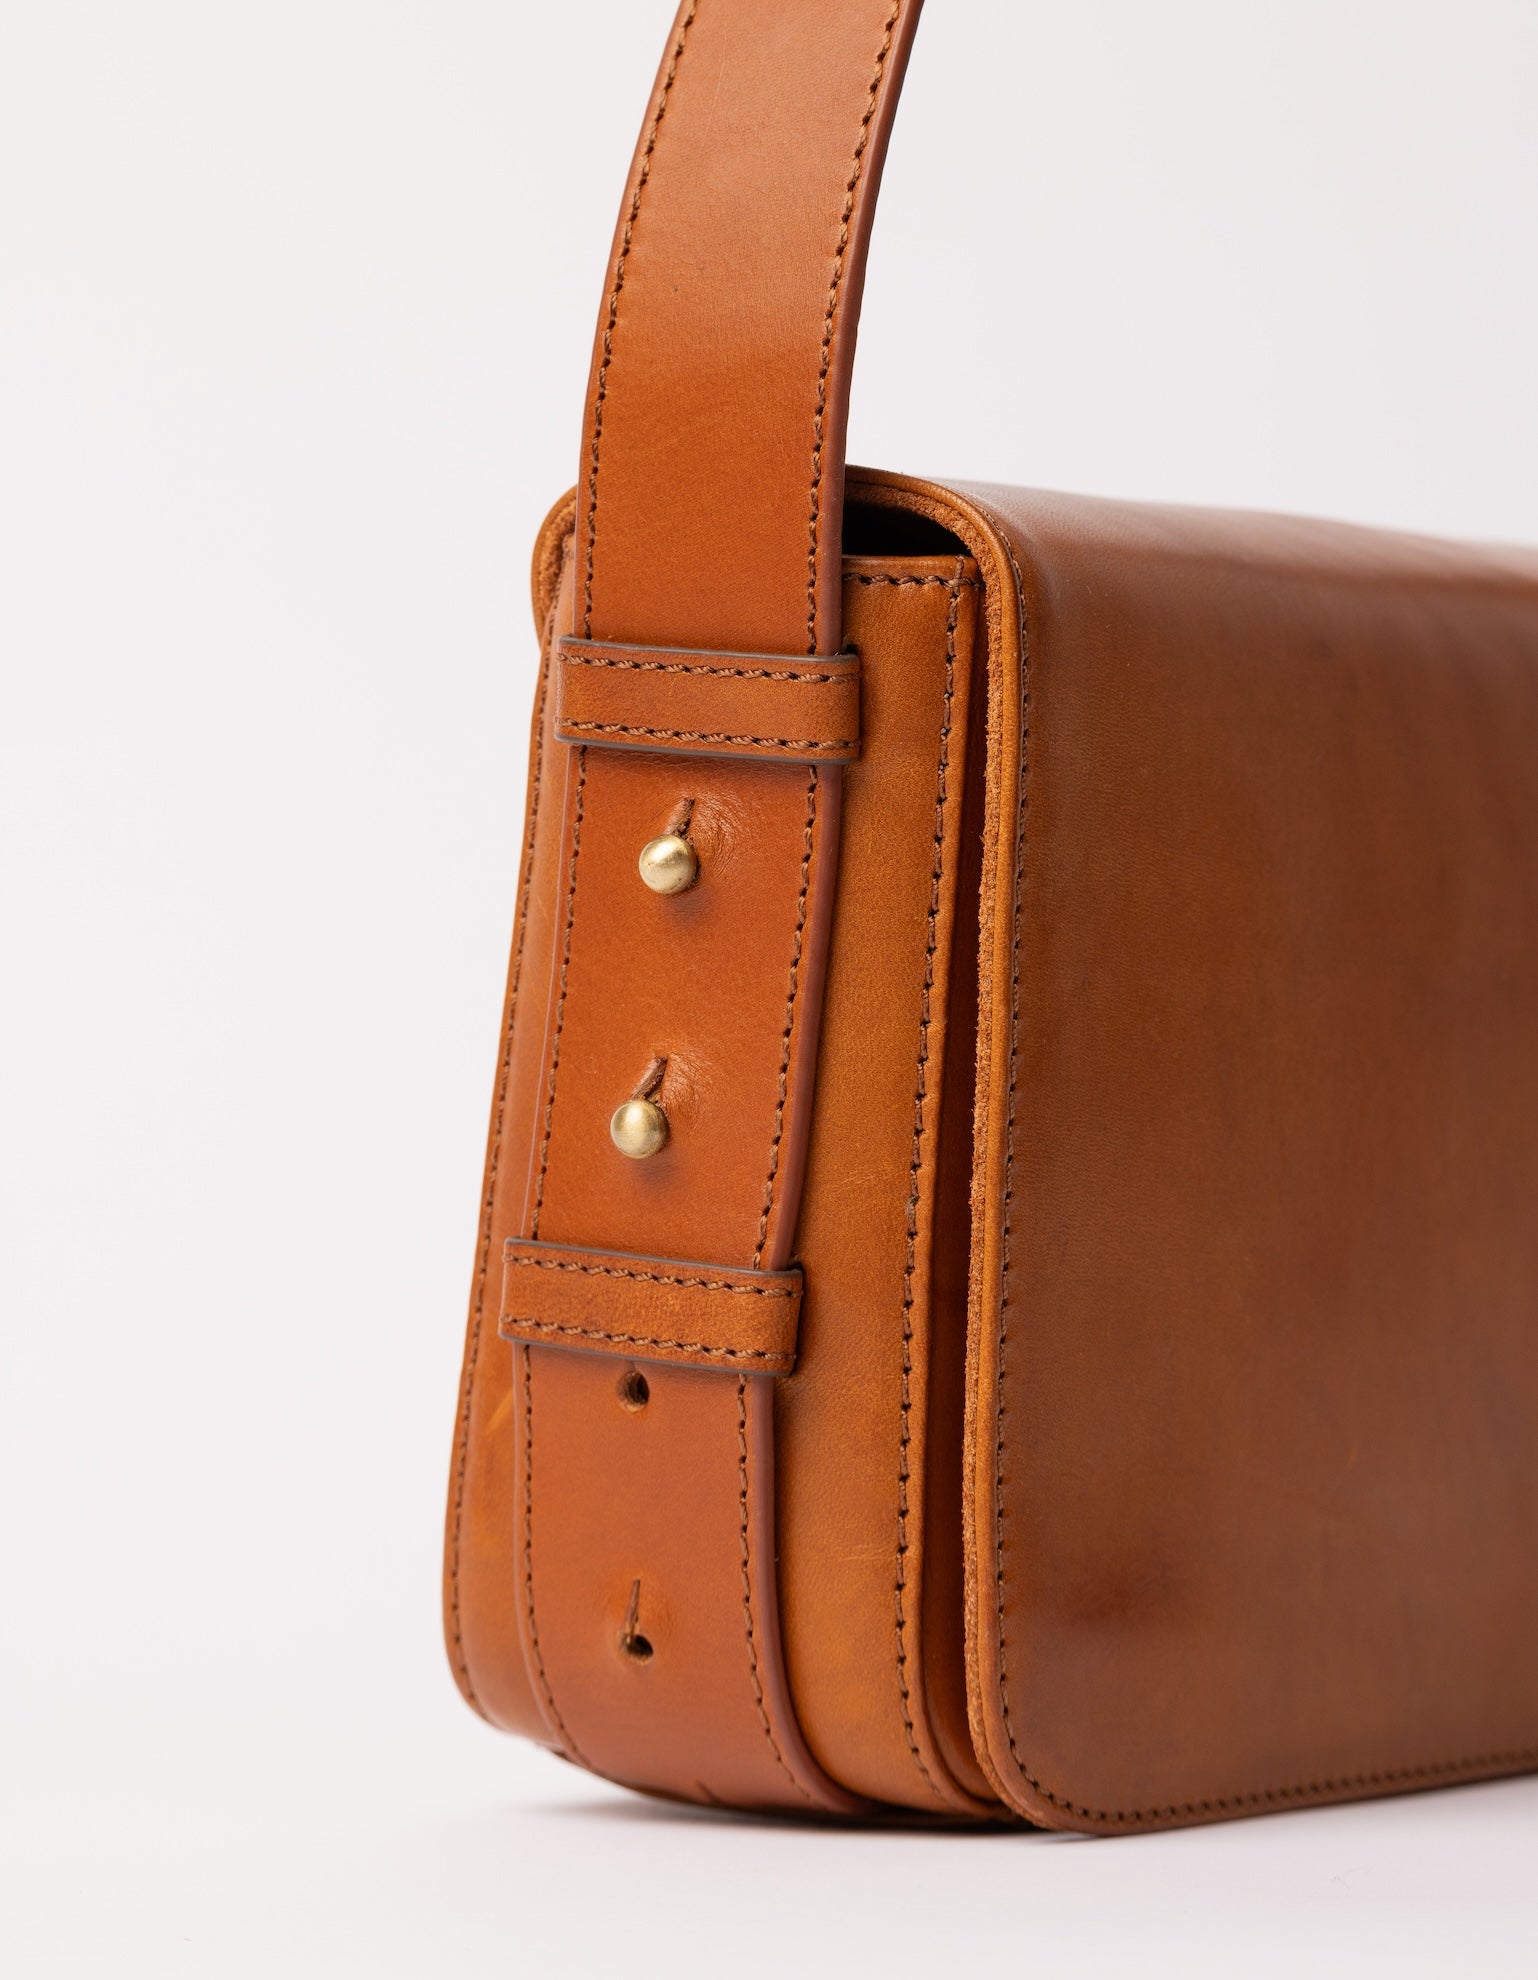 Cognac Baguette Leather womens handbag. Square shape with an adjustable strap. Close-up of adjustable strap details.